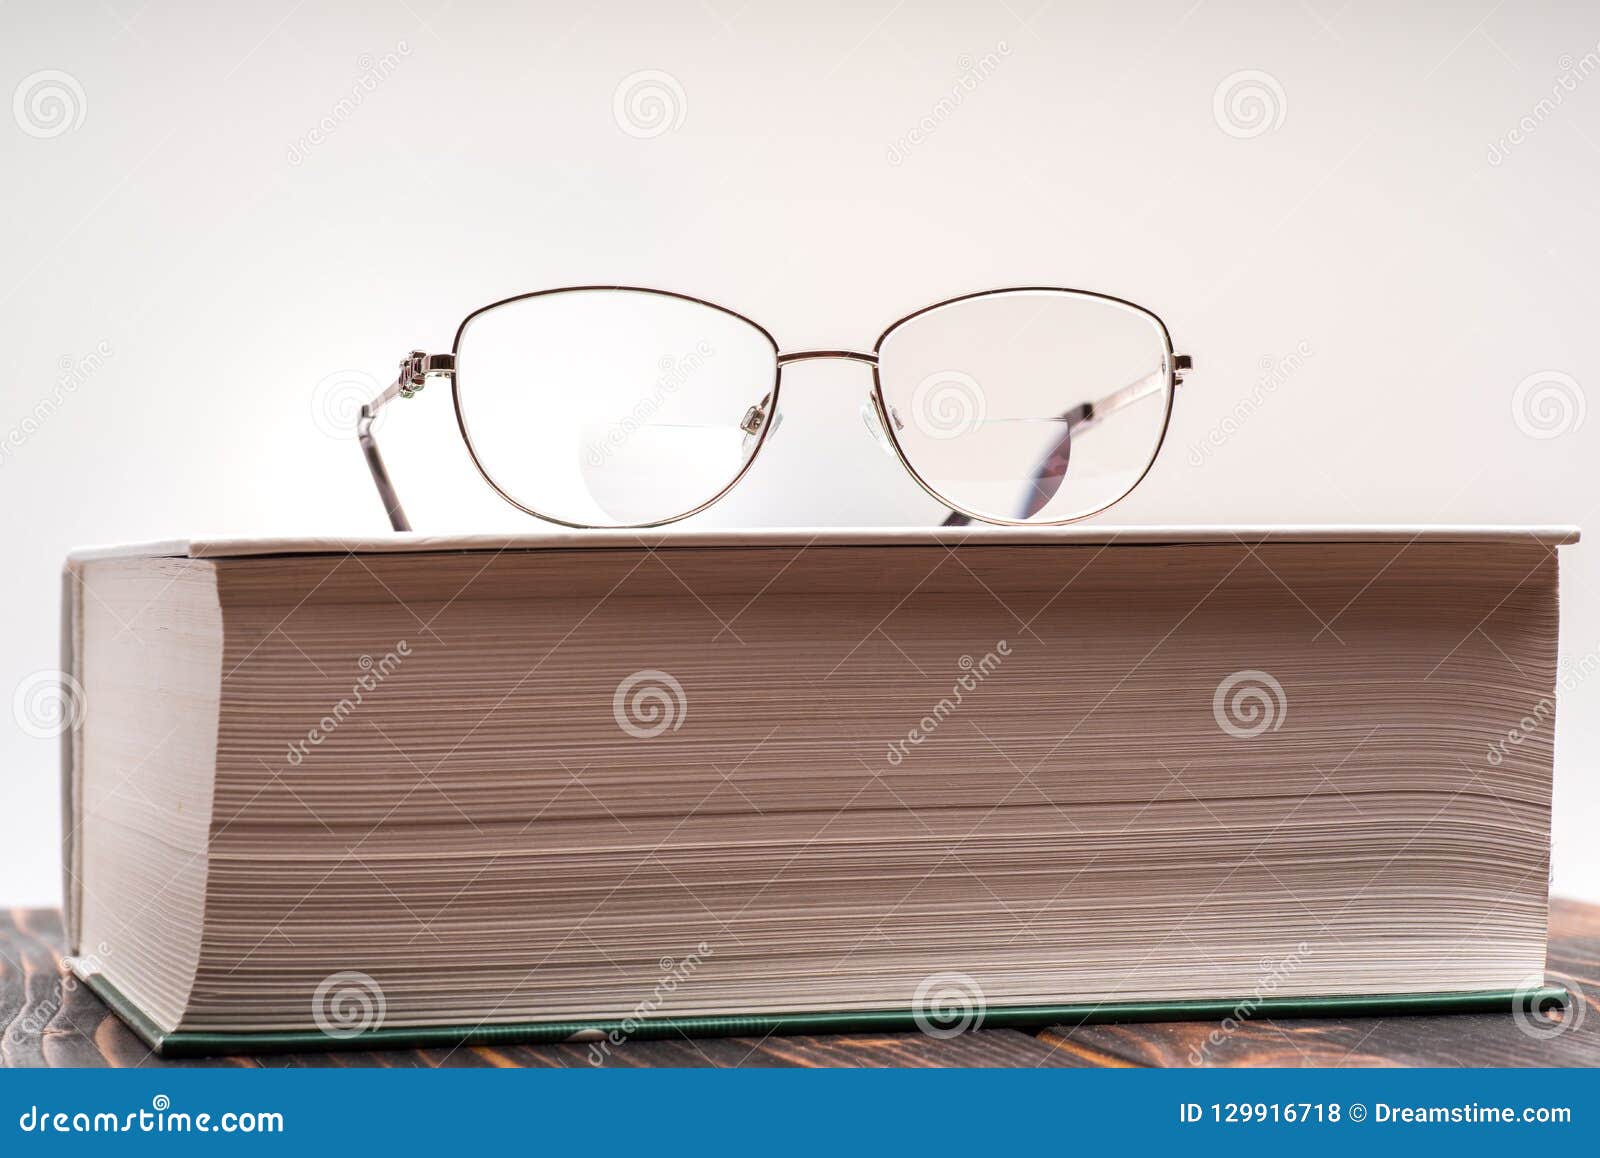 eyeglasses with bifocal lenses on book